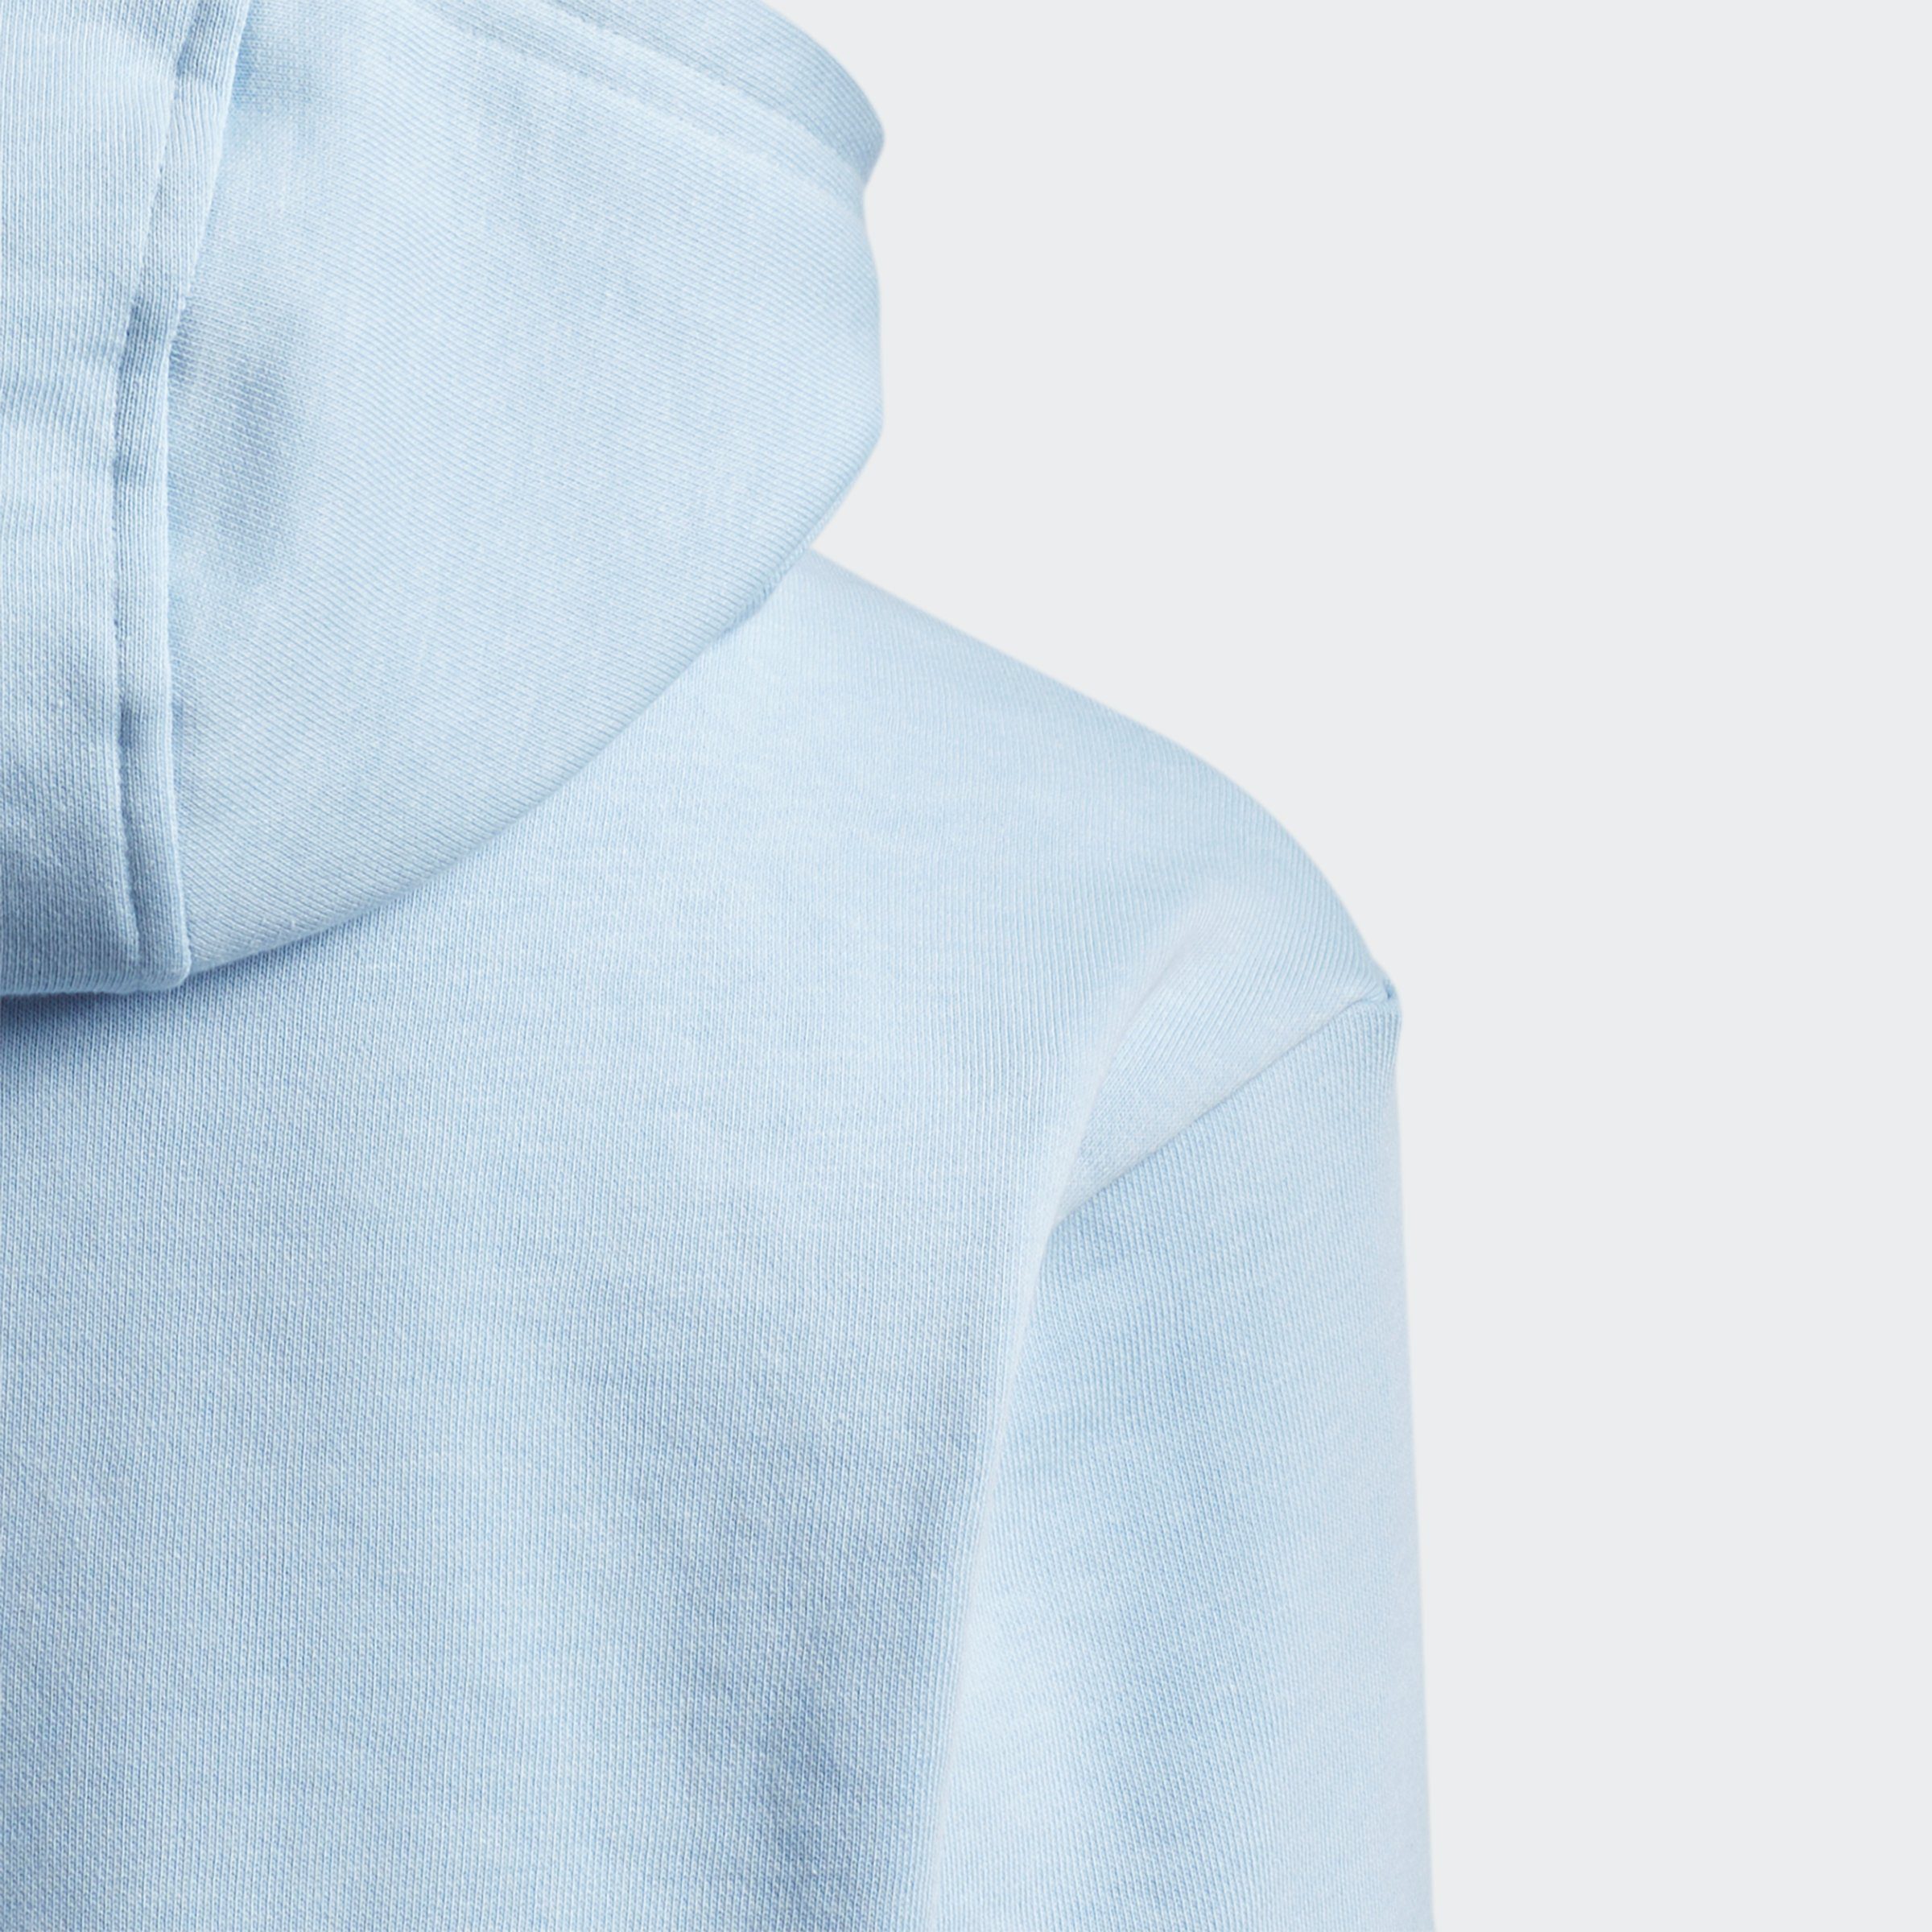 Sky adidas / Originals Sweatshirt HOODIE TREFOIL White Clear